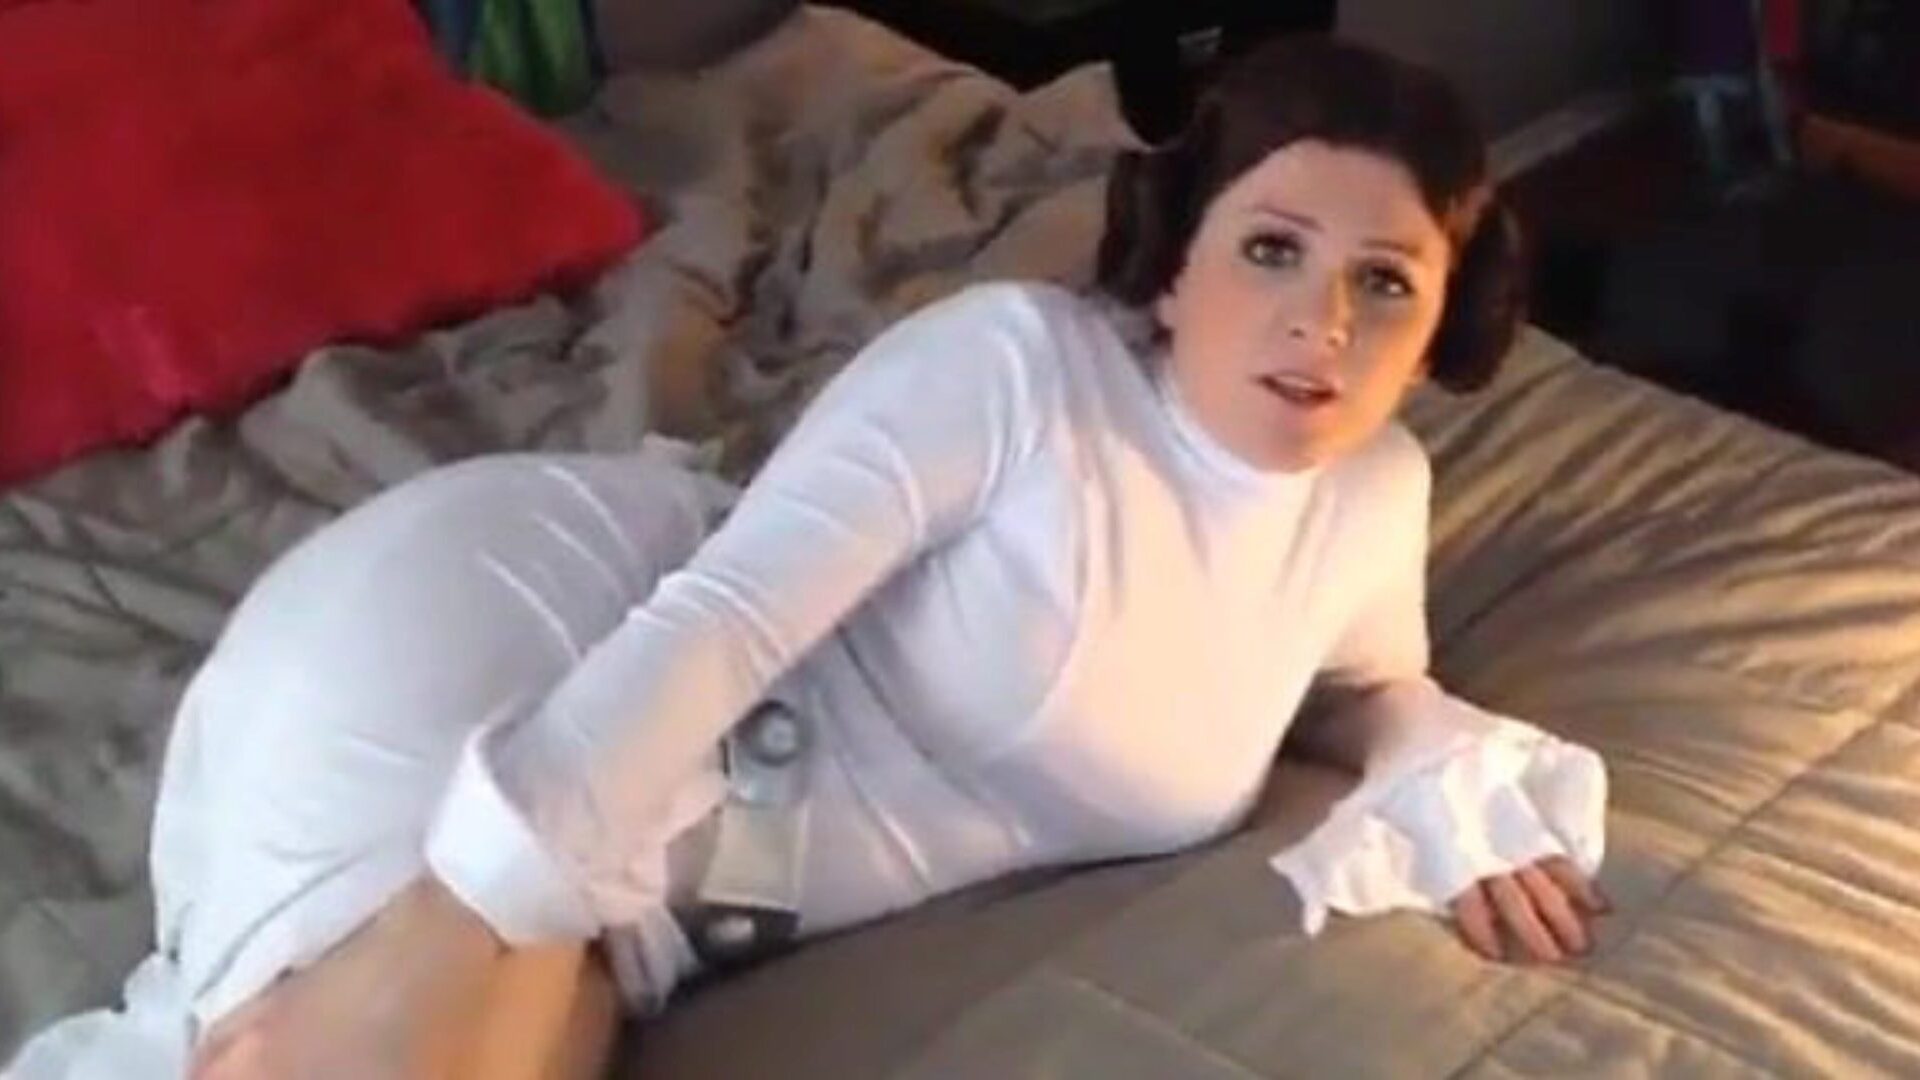 Princess Leia Sucks and Bonks - Pleasant Daisy Haze [Star Wars]